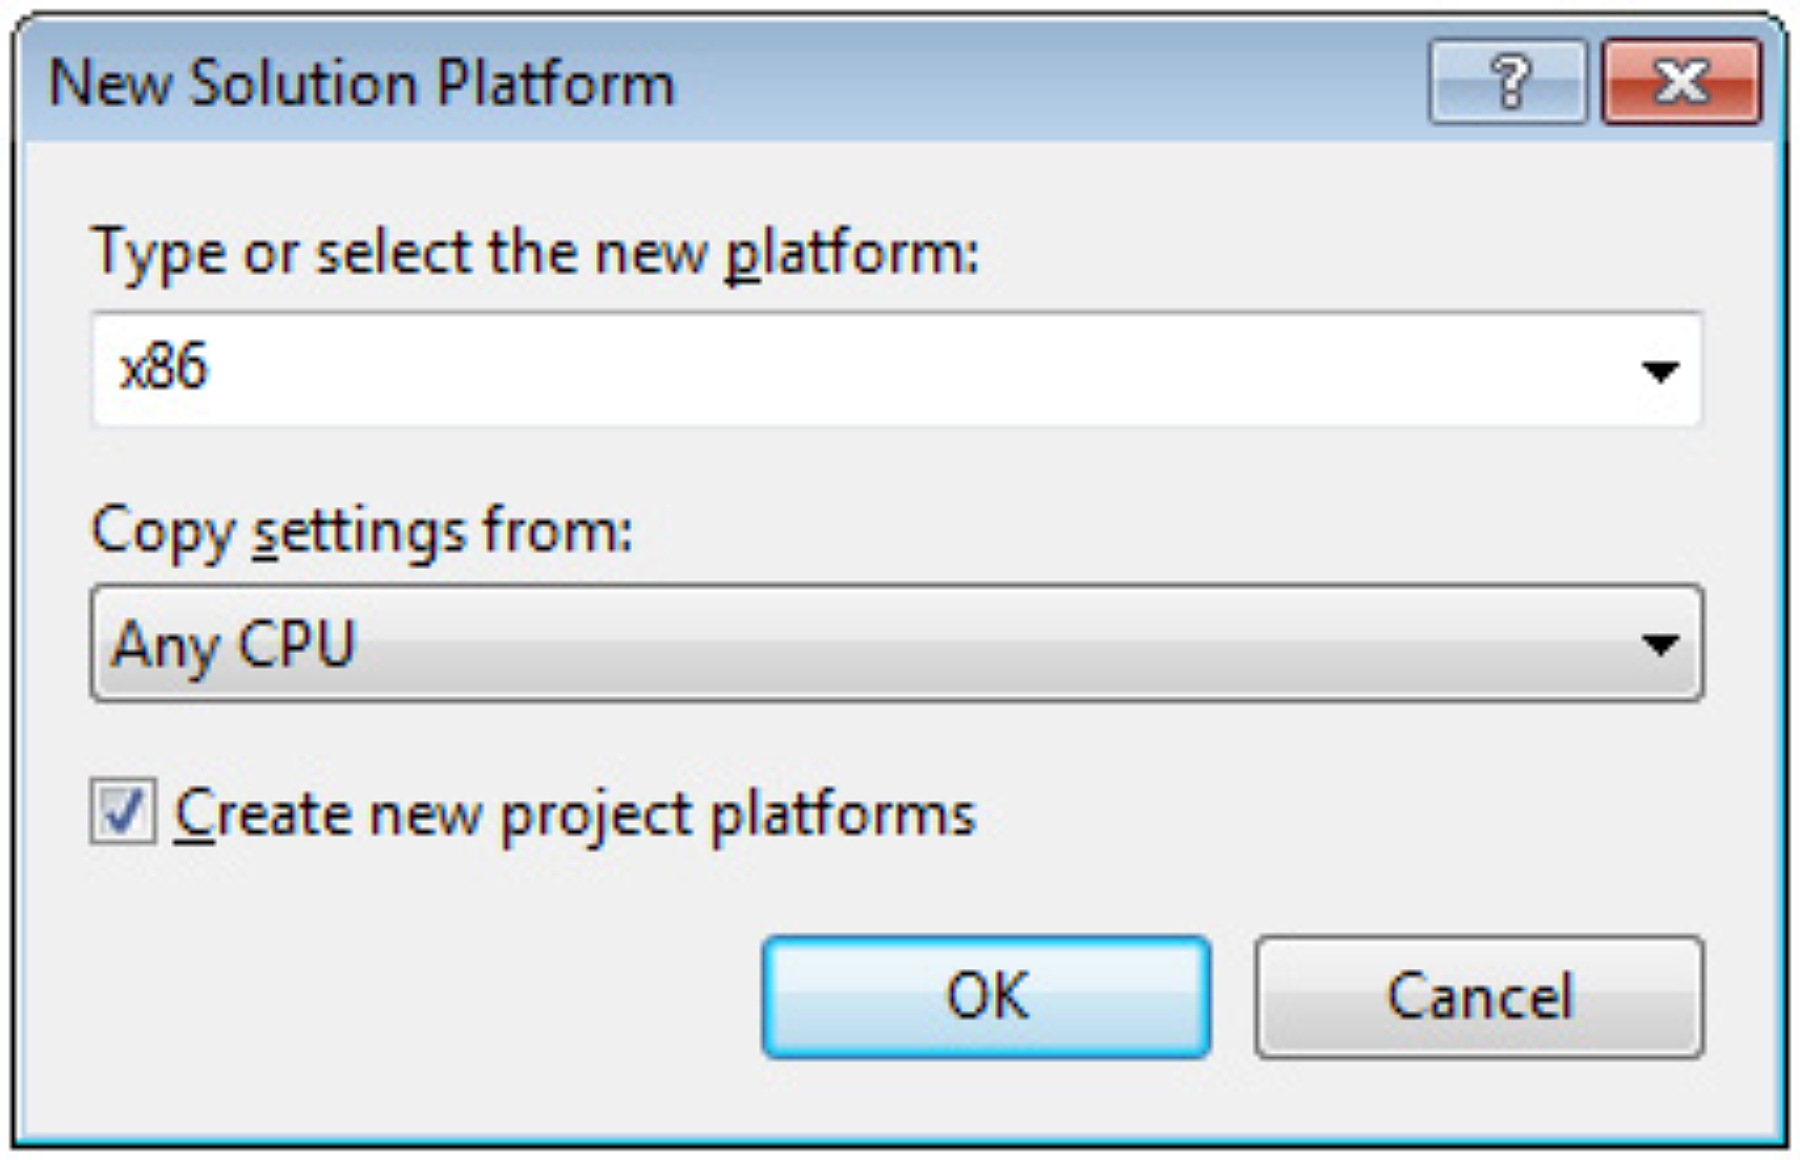 Figure 7. Configuration Manager's New Solution Platform window.